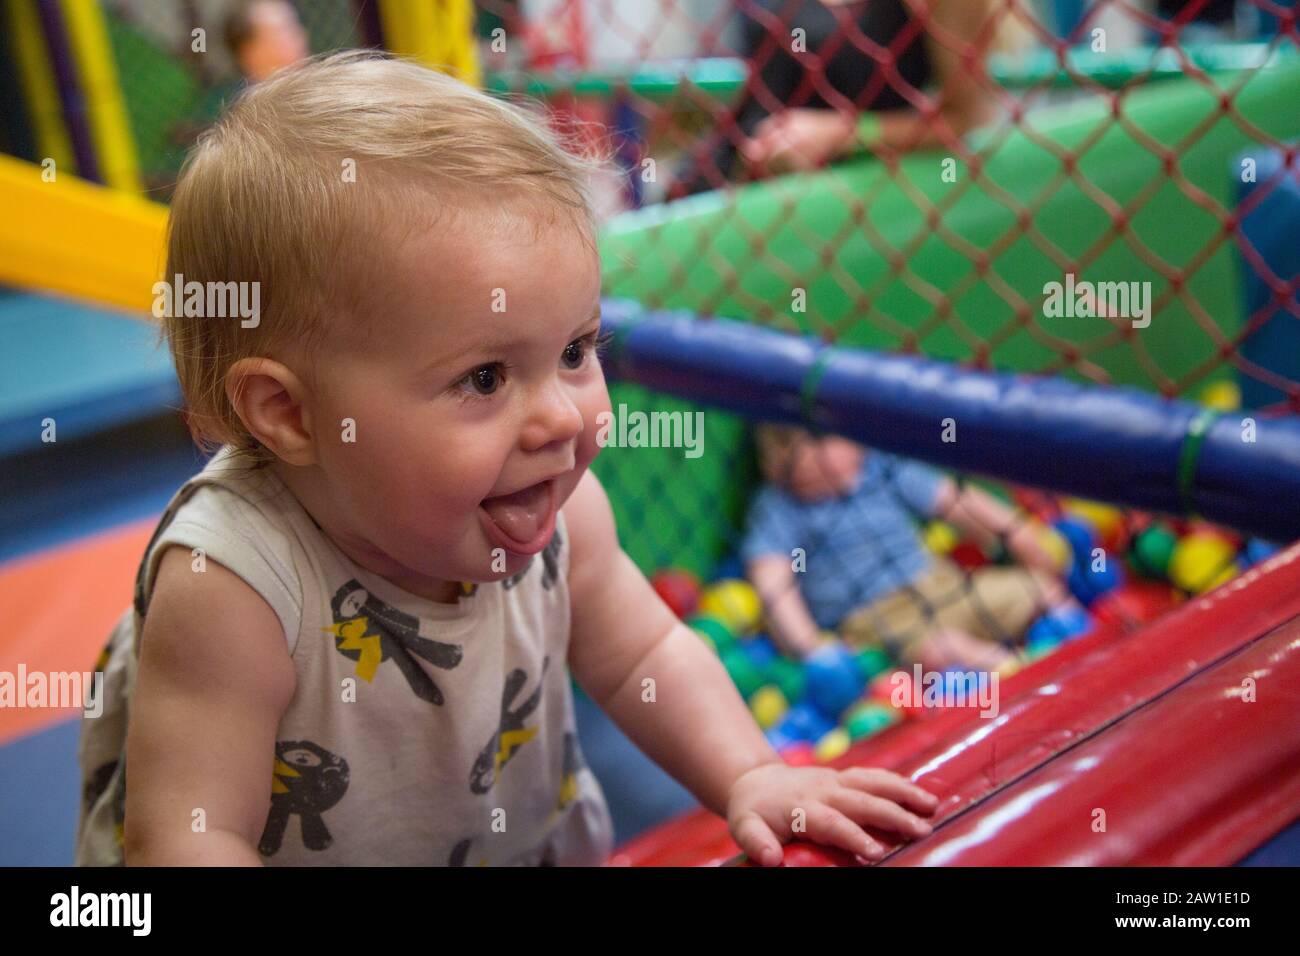 Child playing at softplay, Uk Stock Photo